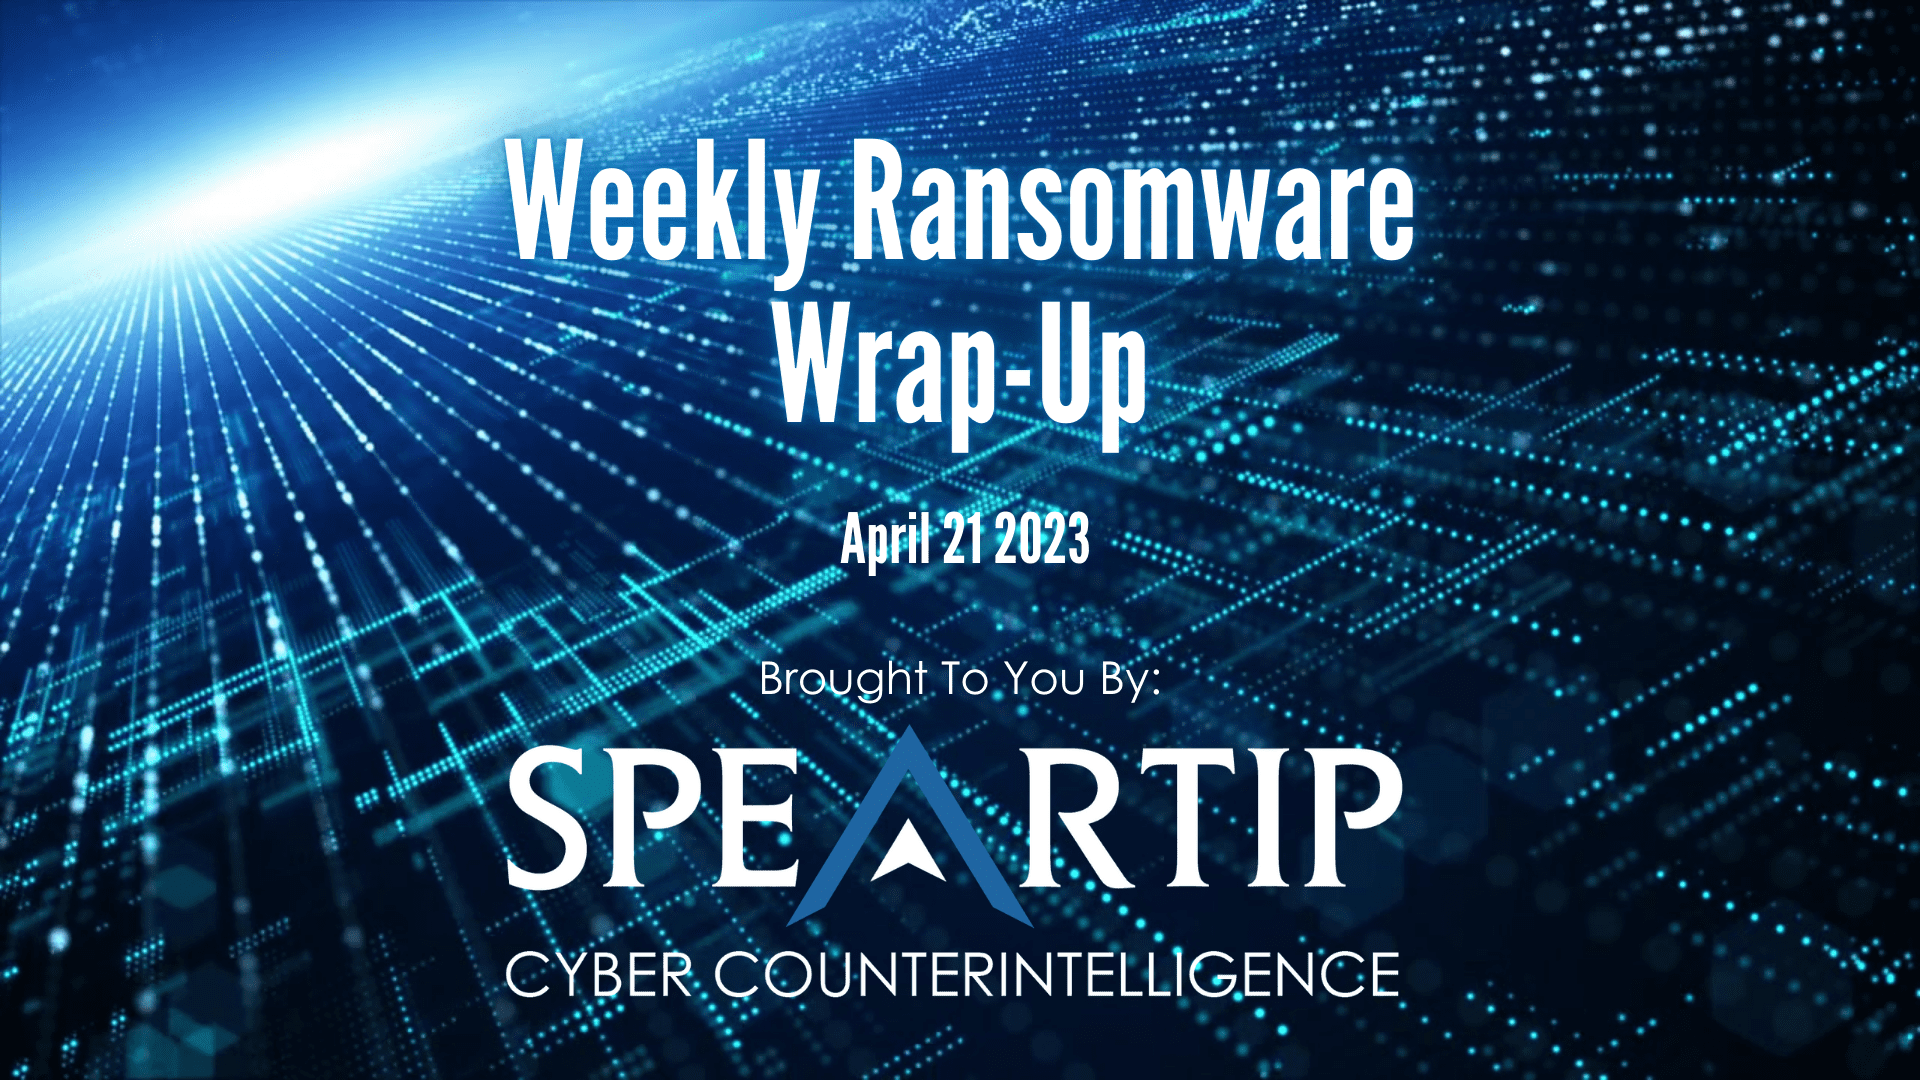 April 21, 2023 Ransomware Wrap-Up